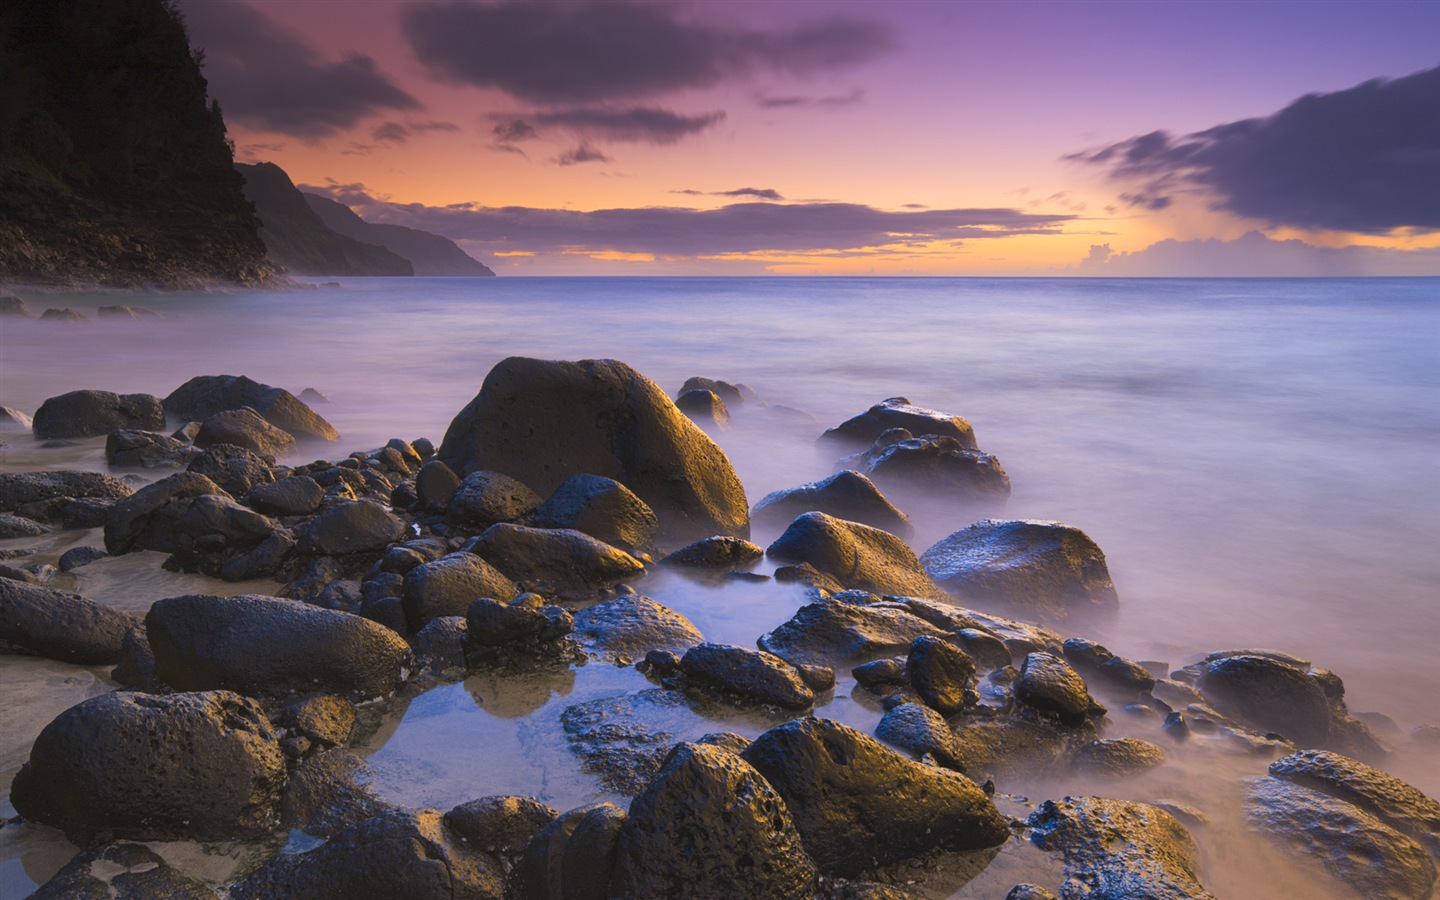 Windows 8 theme wallpaper: Beach sunrise and sunset views #7 - 1440x900